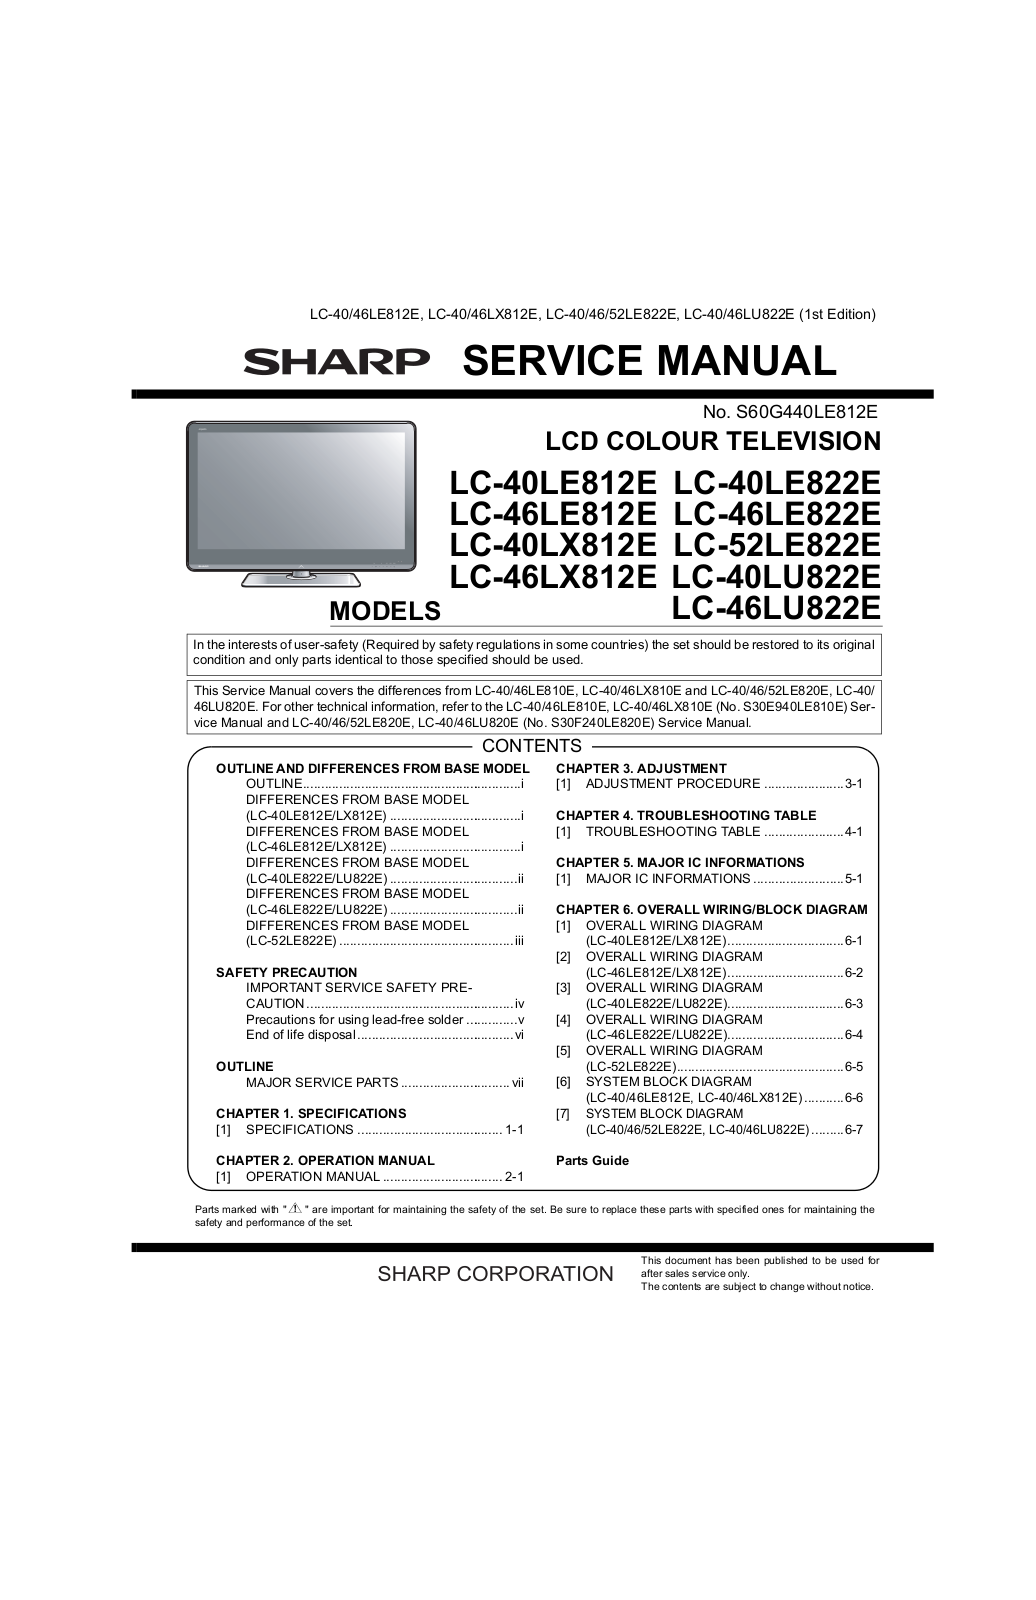 Sharp LC-40LE812E, LC-46LE812E, LC-40LX812E, LC-46LX812E, LC-40LE822E Service manual